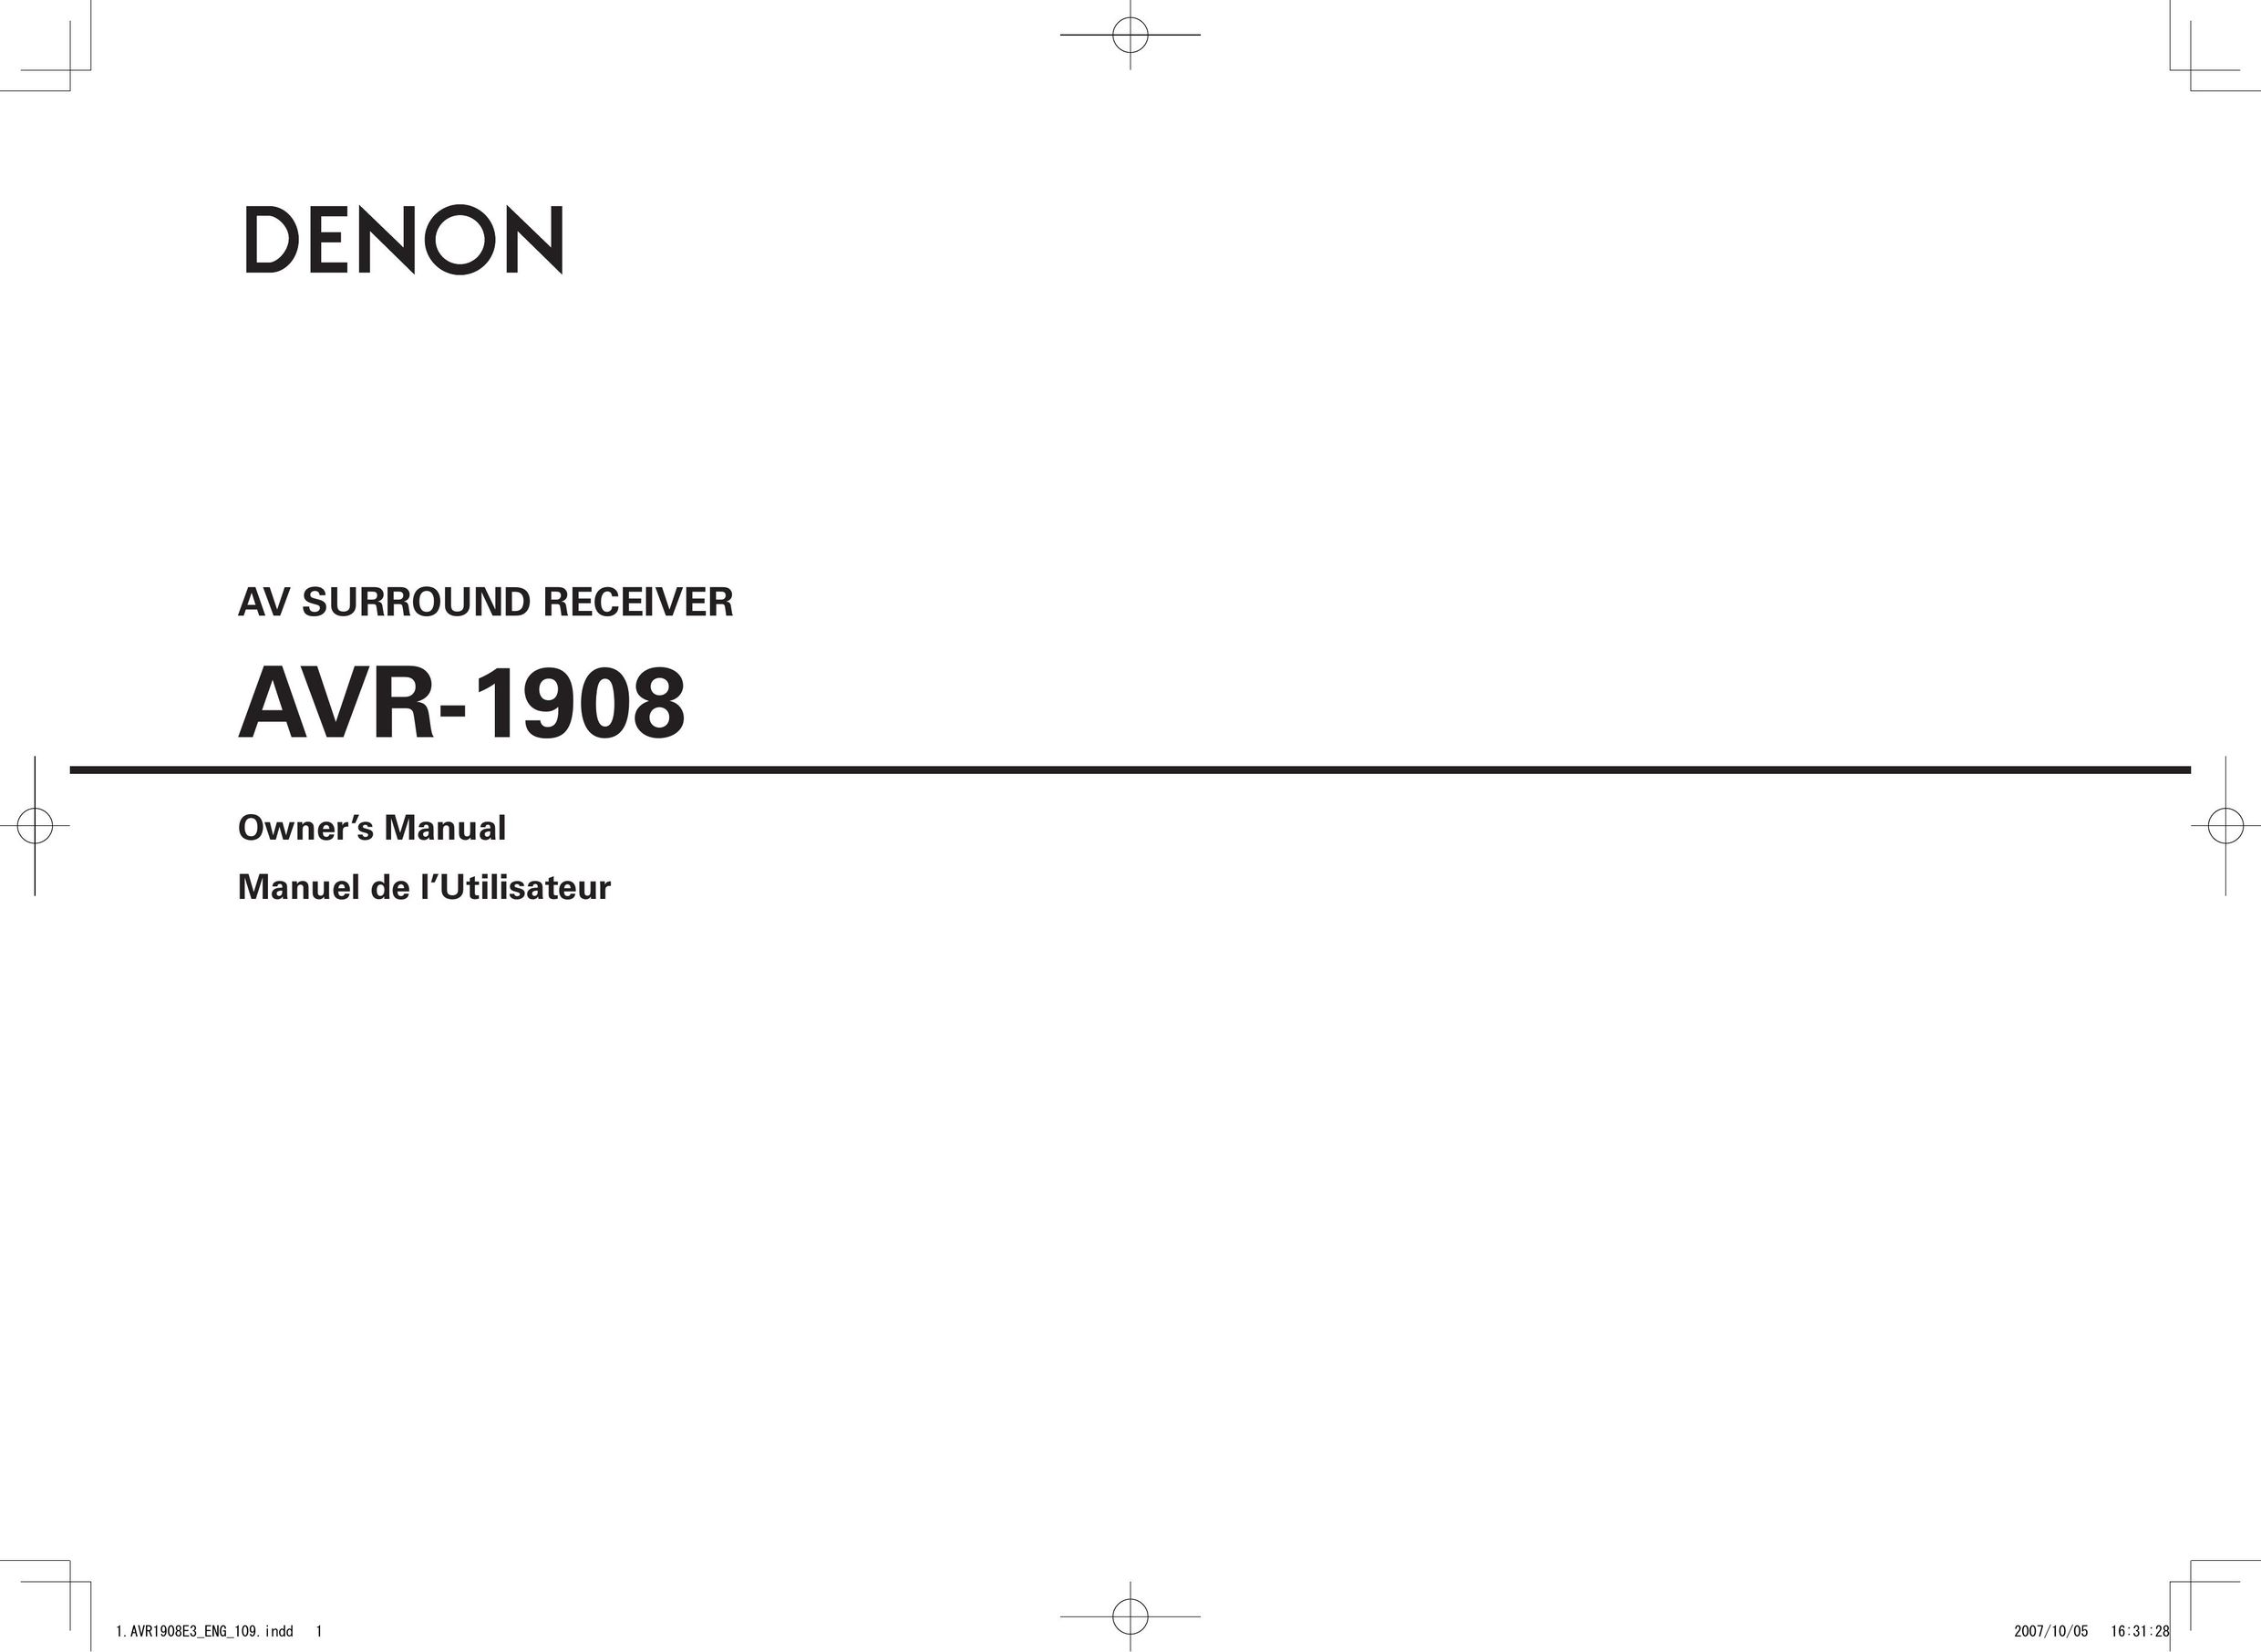 Denon AVR-1908 Stereo Receiver User Manual